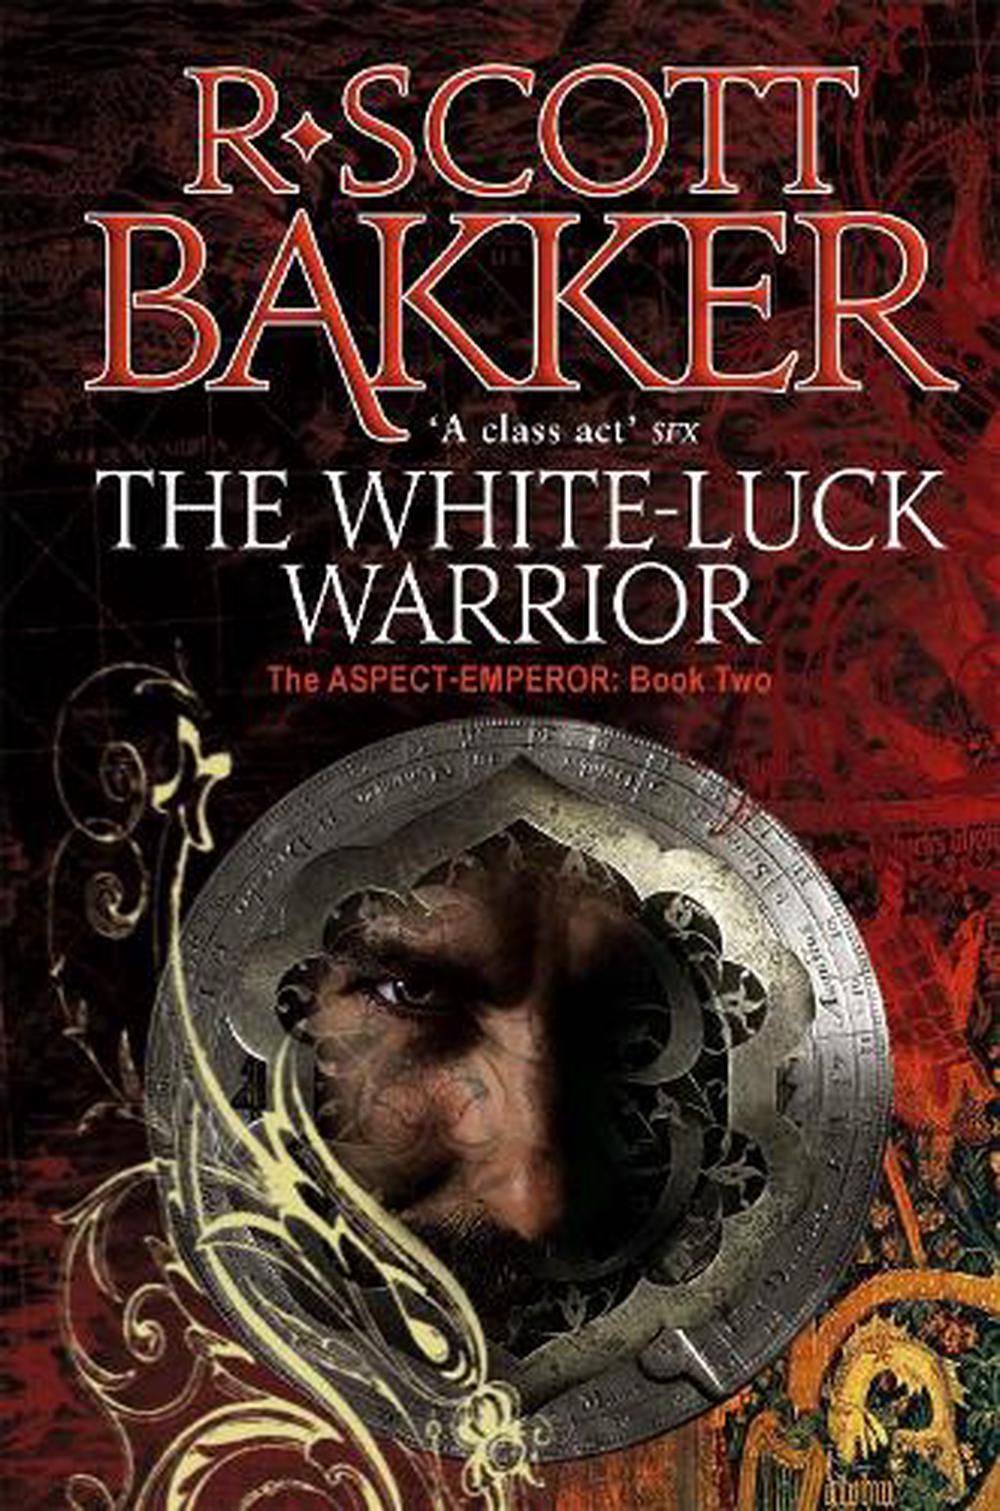 Книга фэнтези император. Скотт Бэккер. Скотт Бэккер князь пустоты. Скотт Бэккер Нейропат. White luck Warrior.